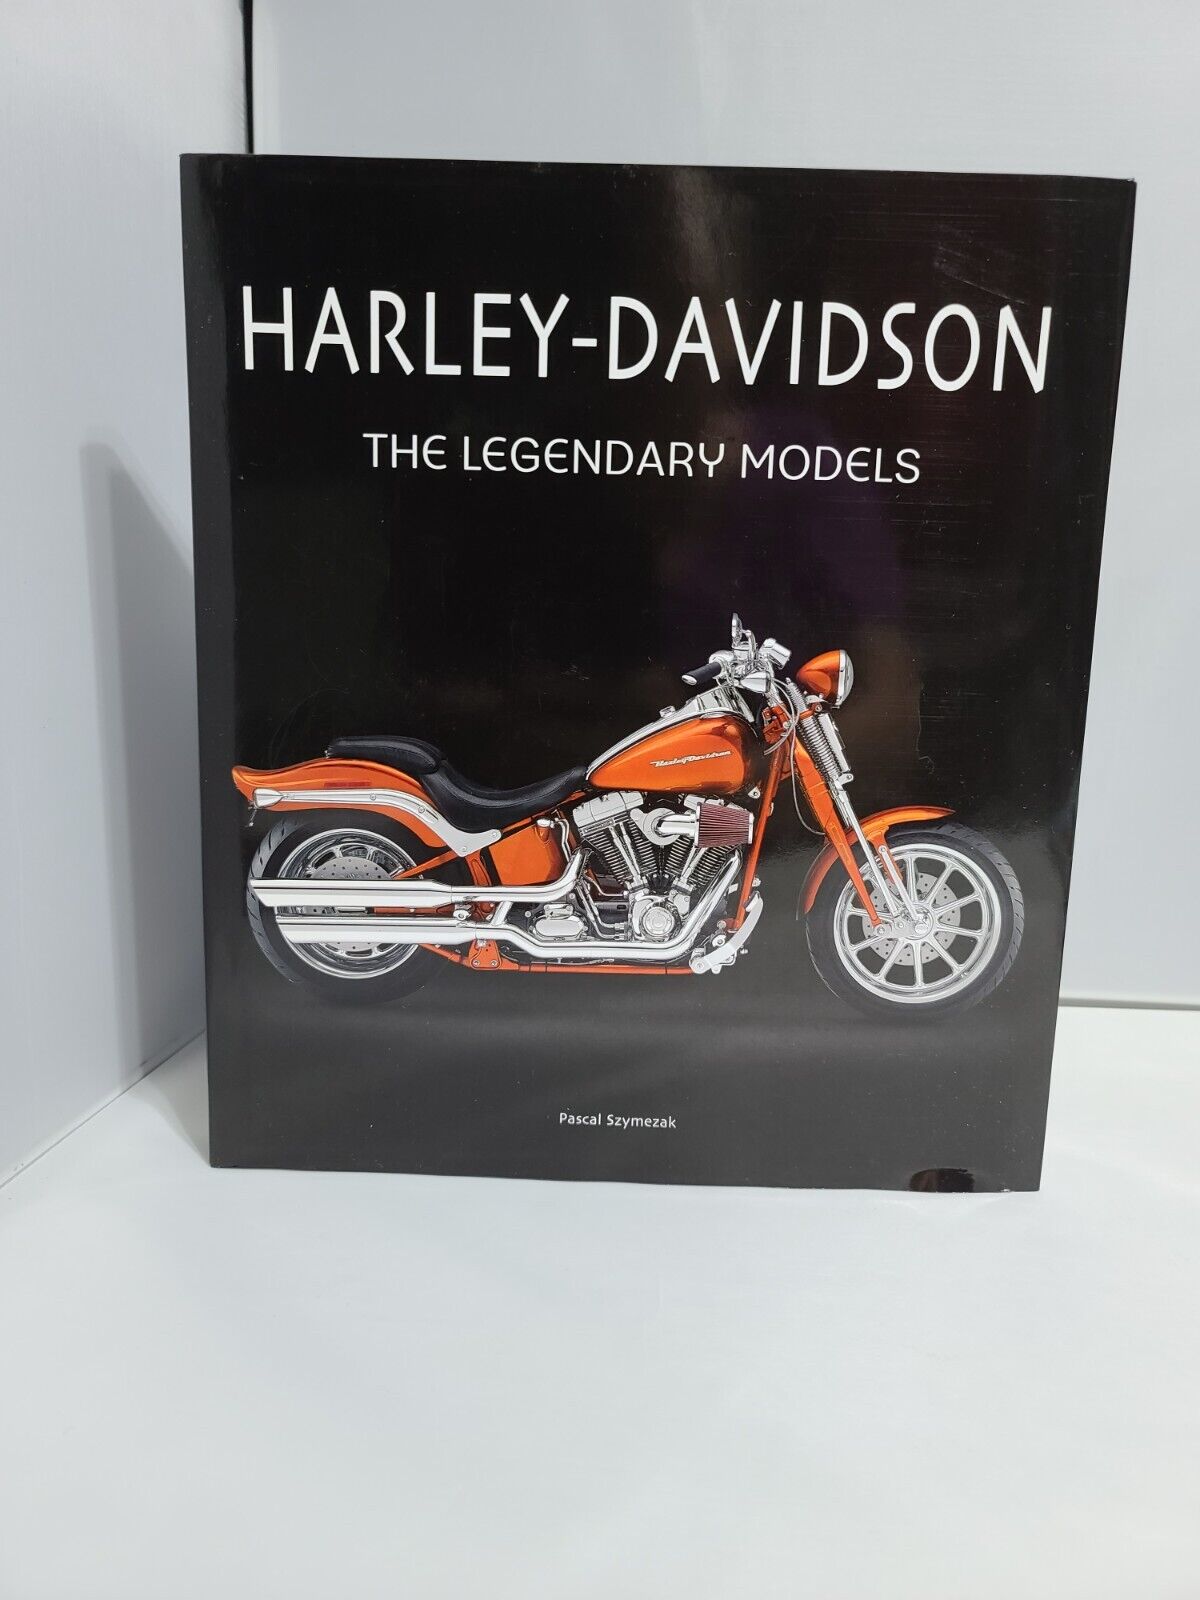 HARLEY DAVIDSON The Legendary Models BOOK hardcover MOTORCYCLE Pascal Szymczak